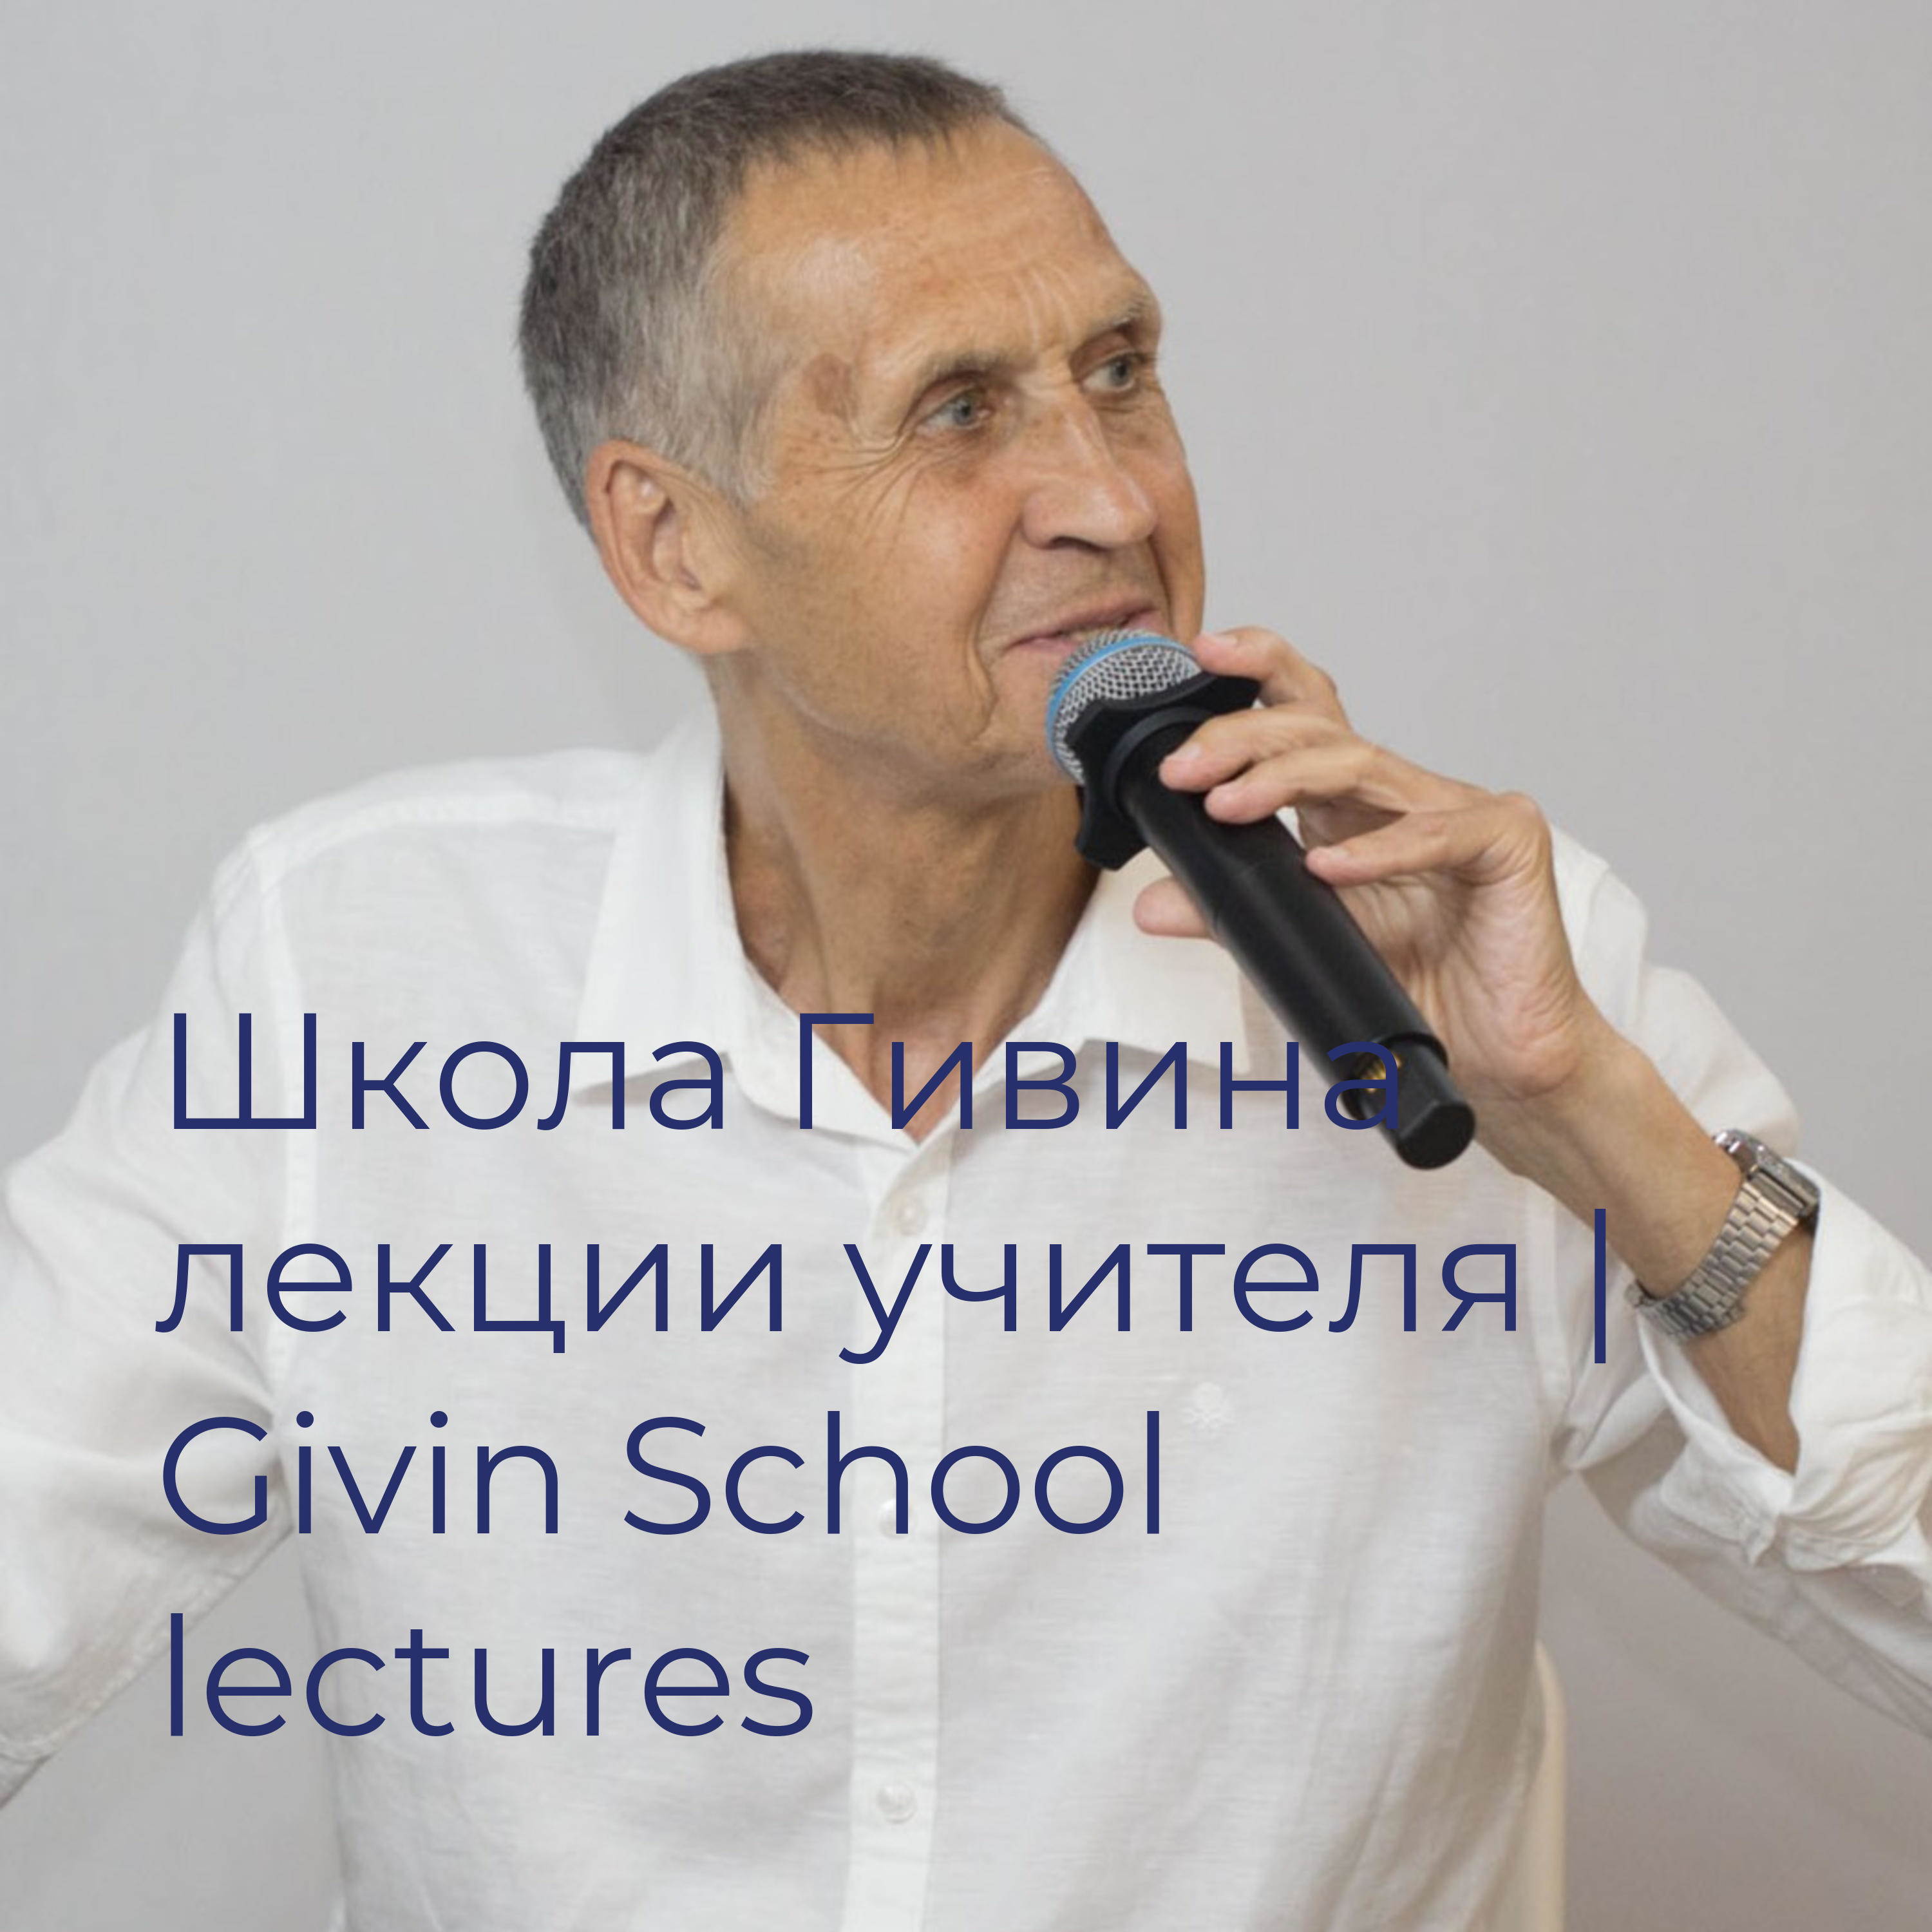 Giving School лекции учителя | Giving School lectures